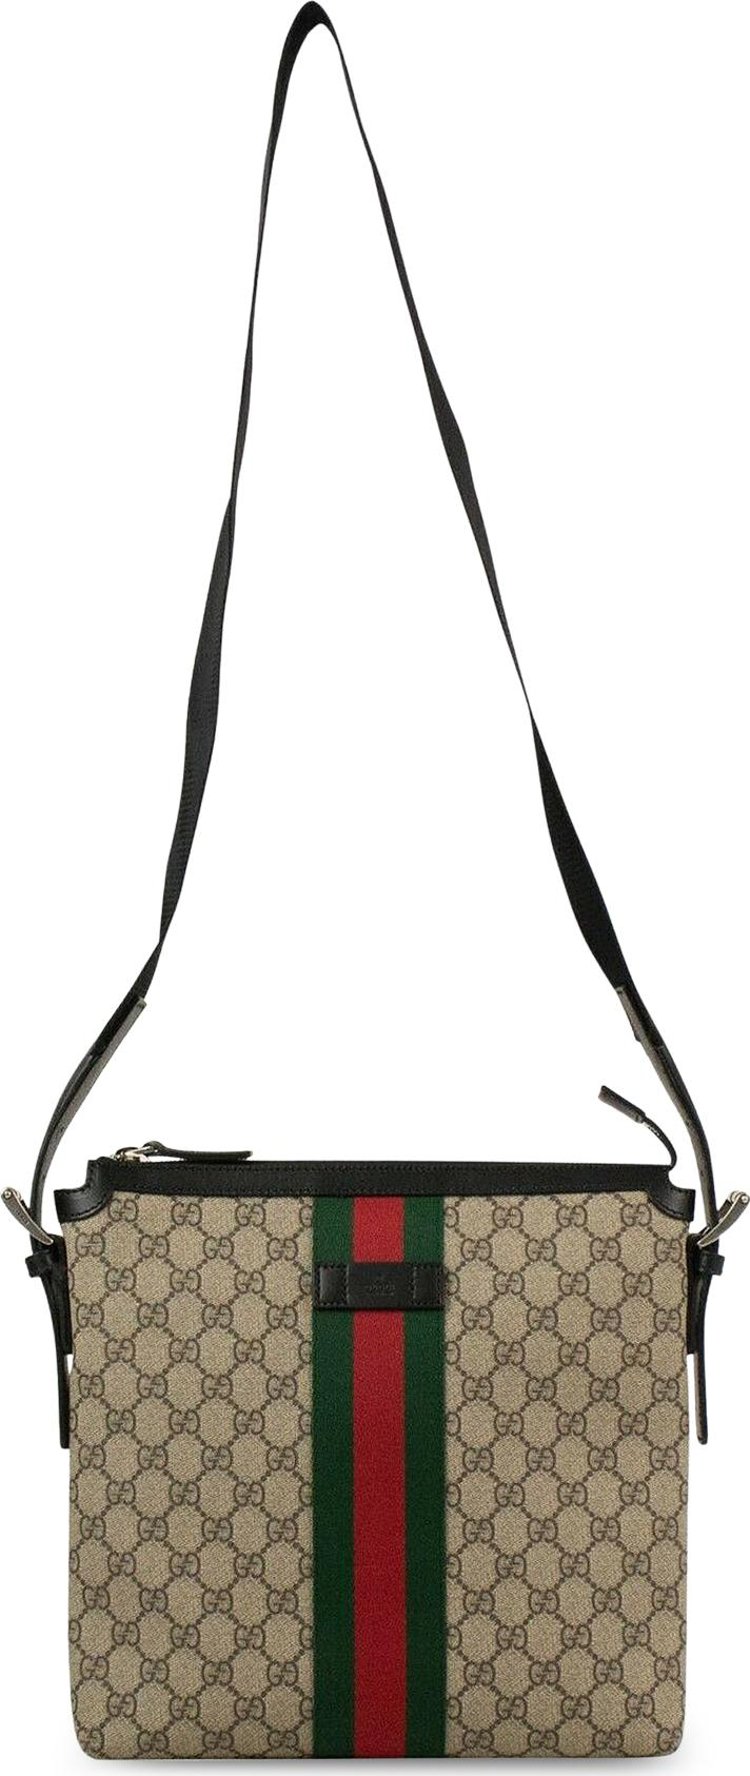 Gucci Beige/Ebony GG Supreme Canvas Web Flat Messenger Bag at